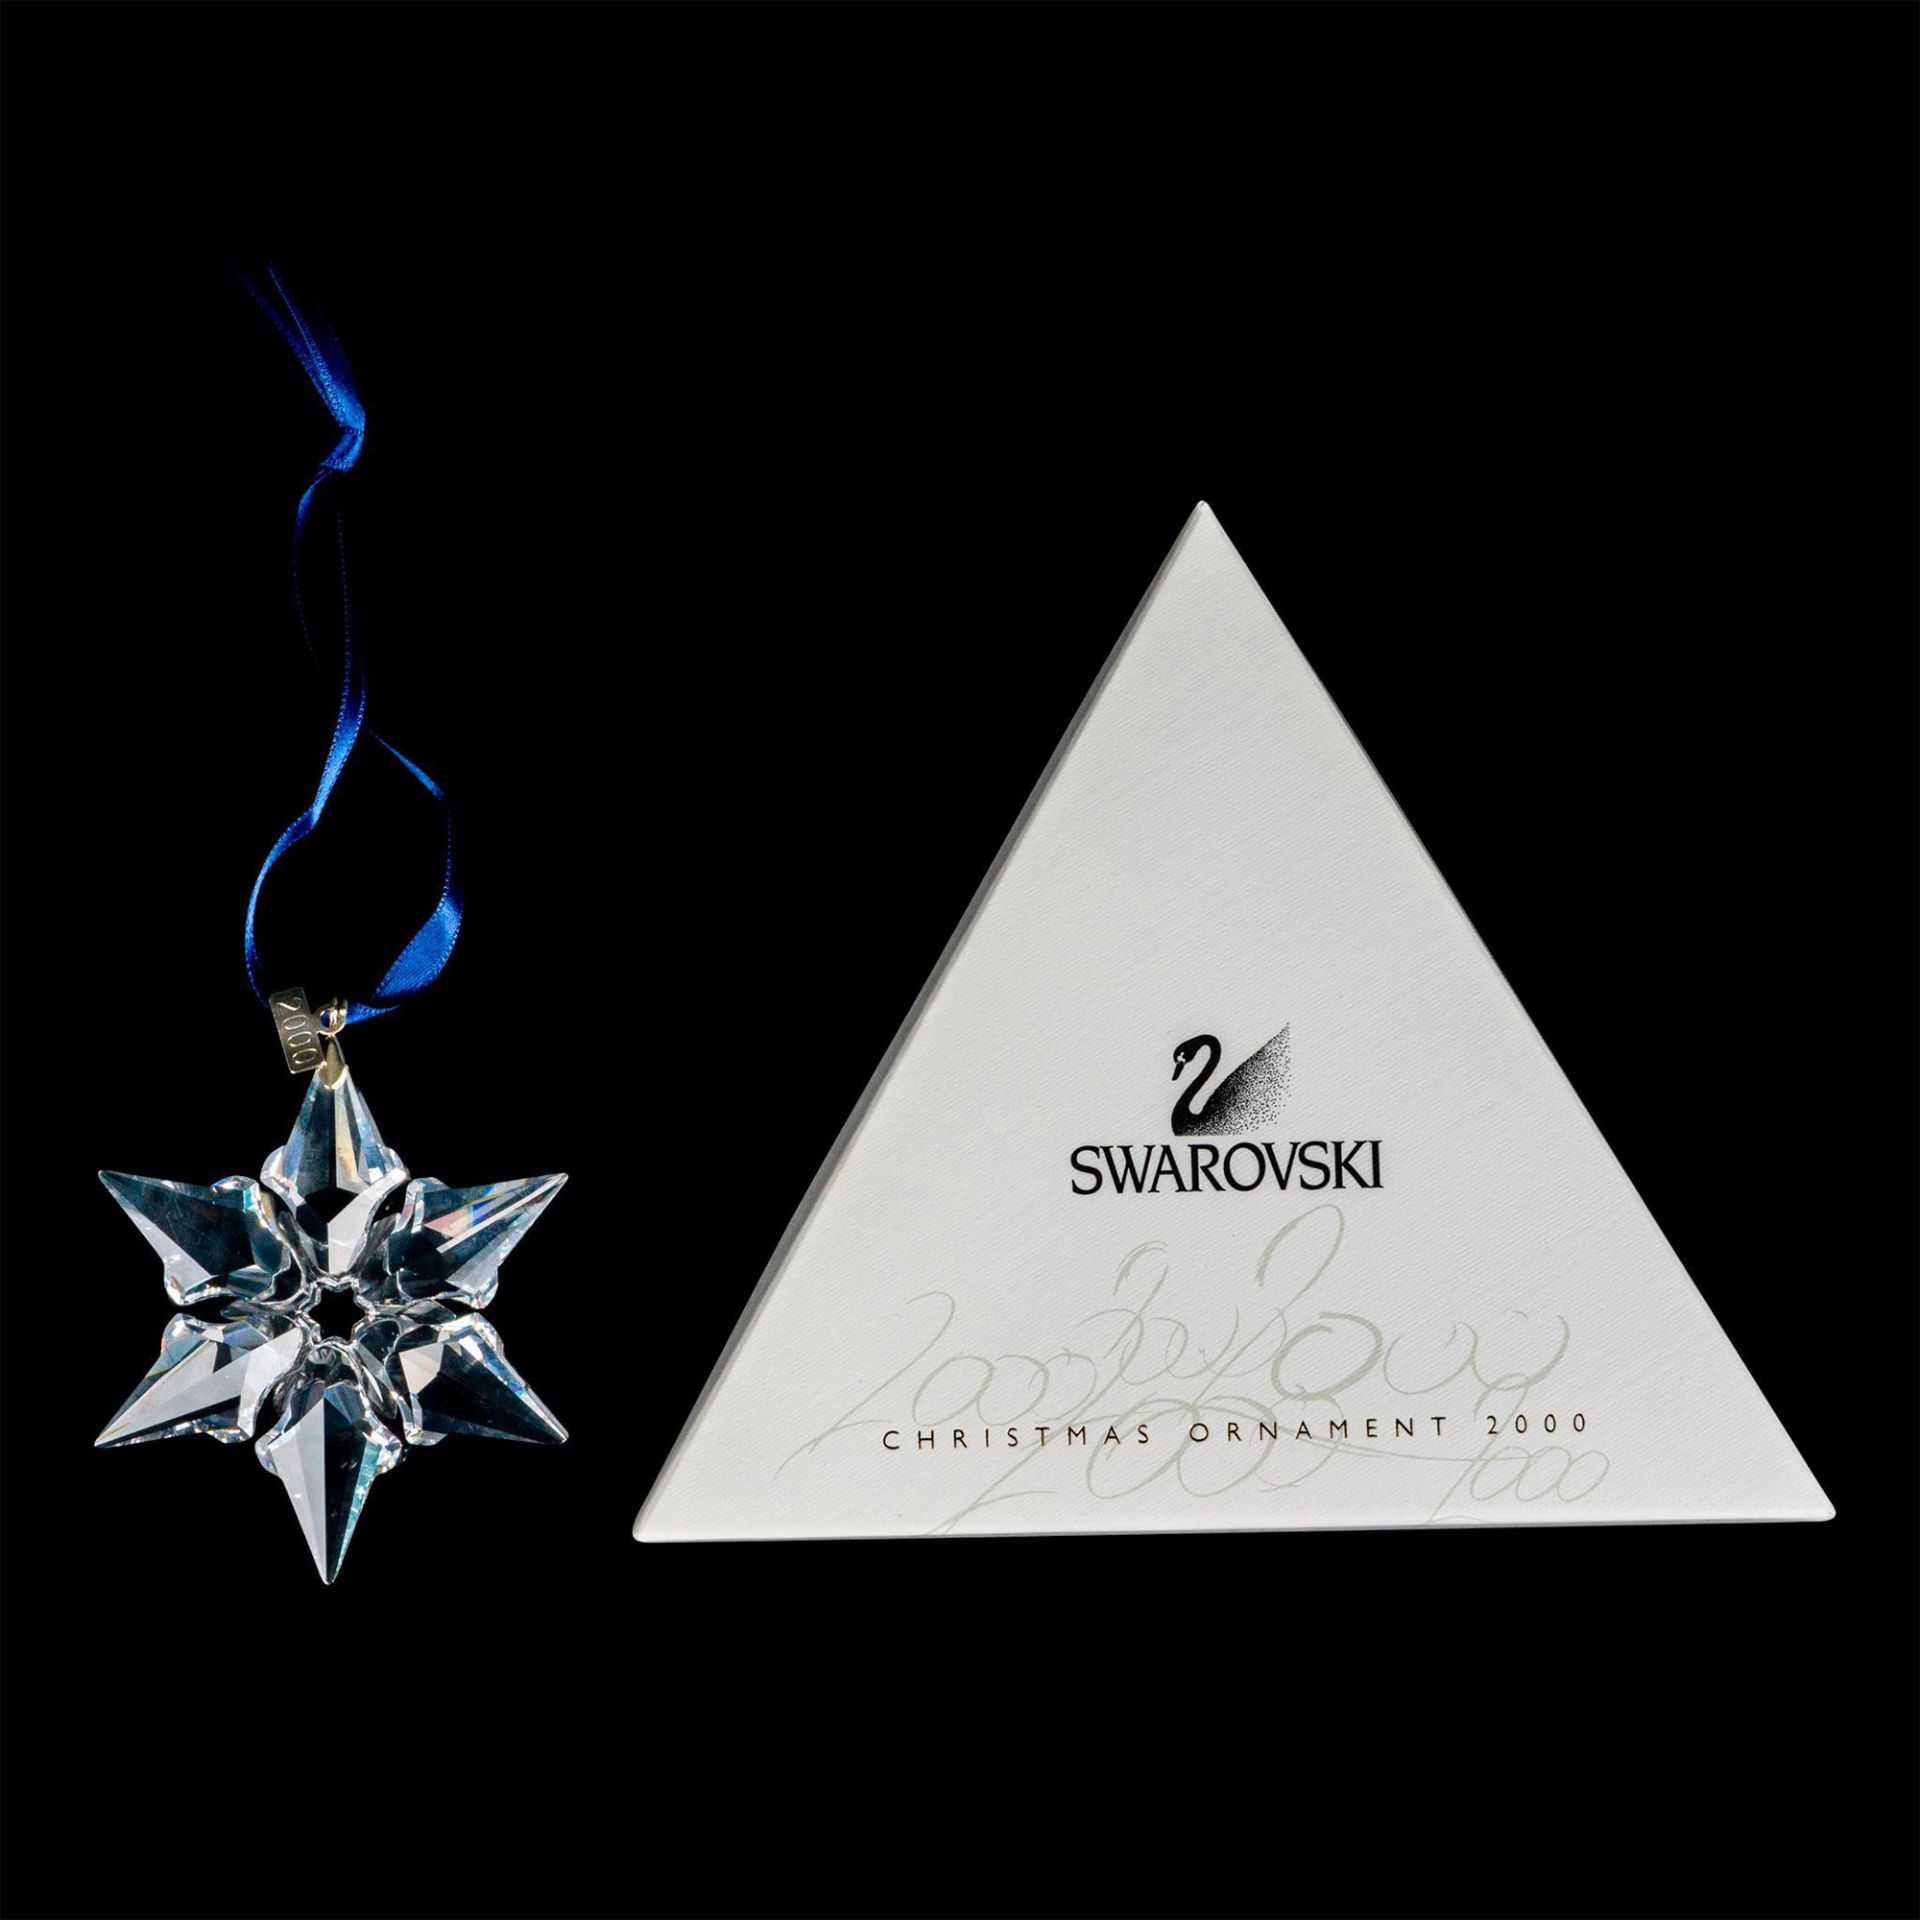 Swarovski Crystal Holiday Ornament 2000 - Image 2 of 2